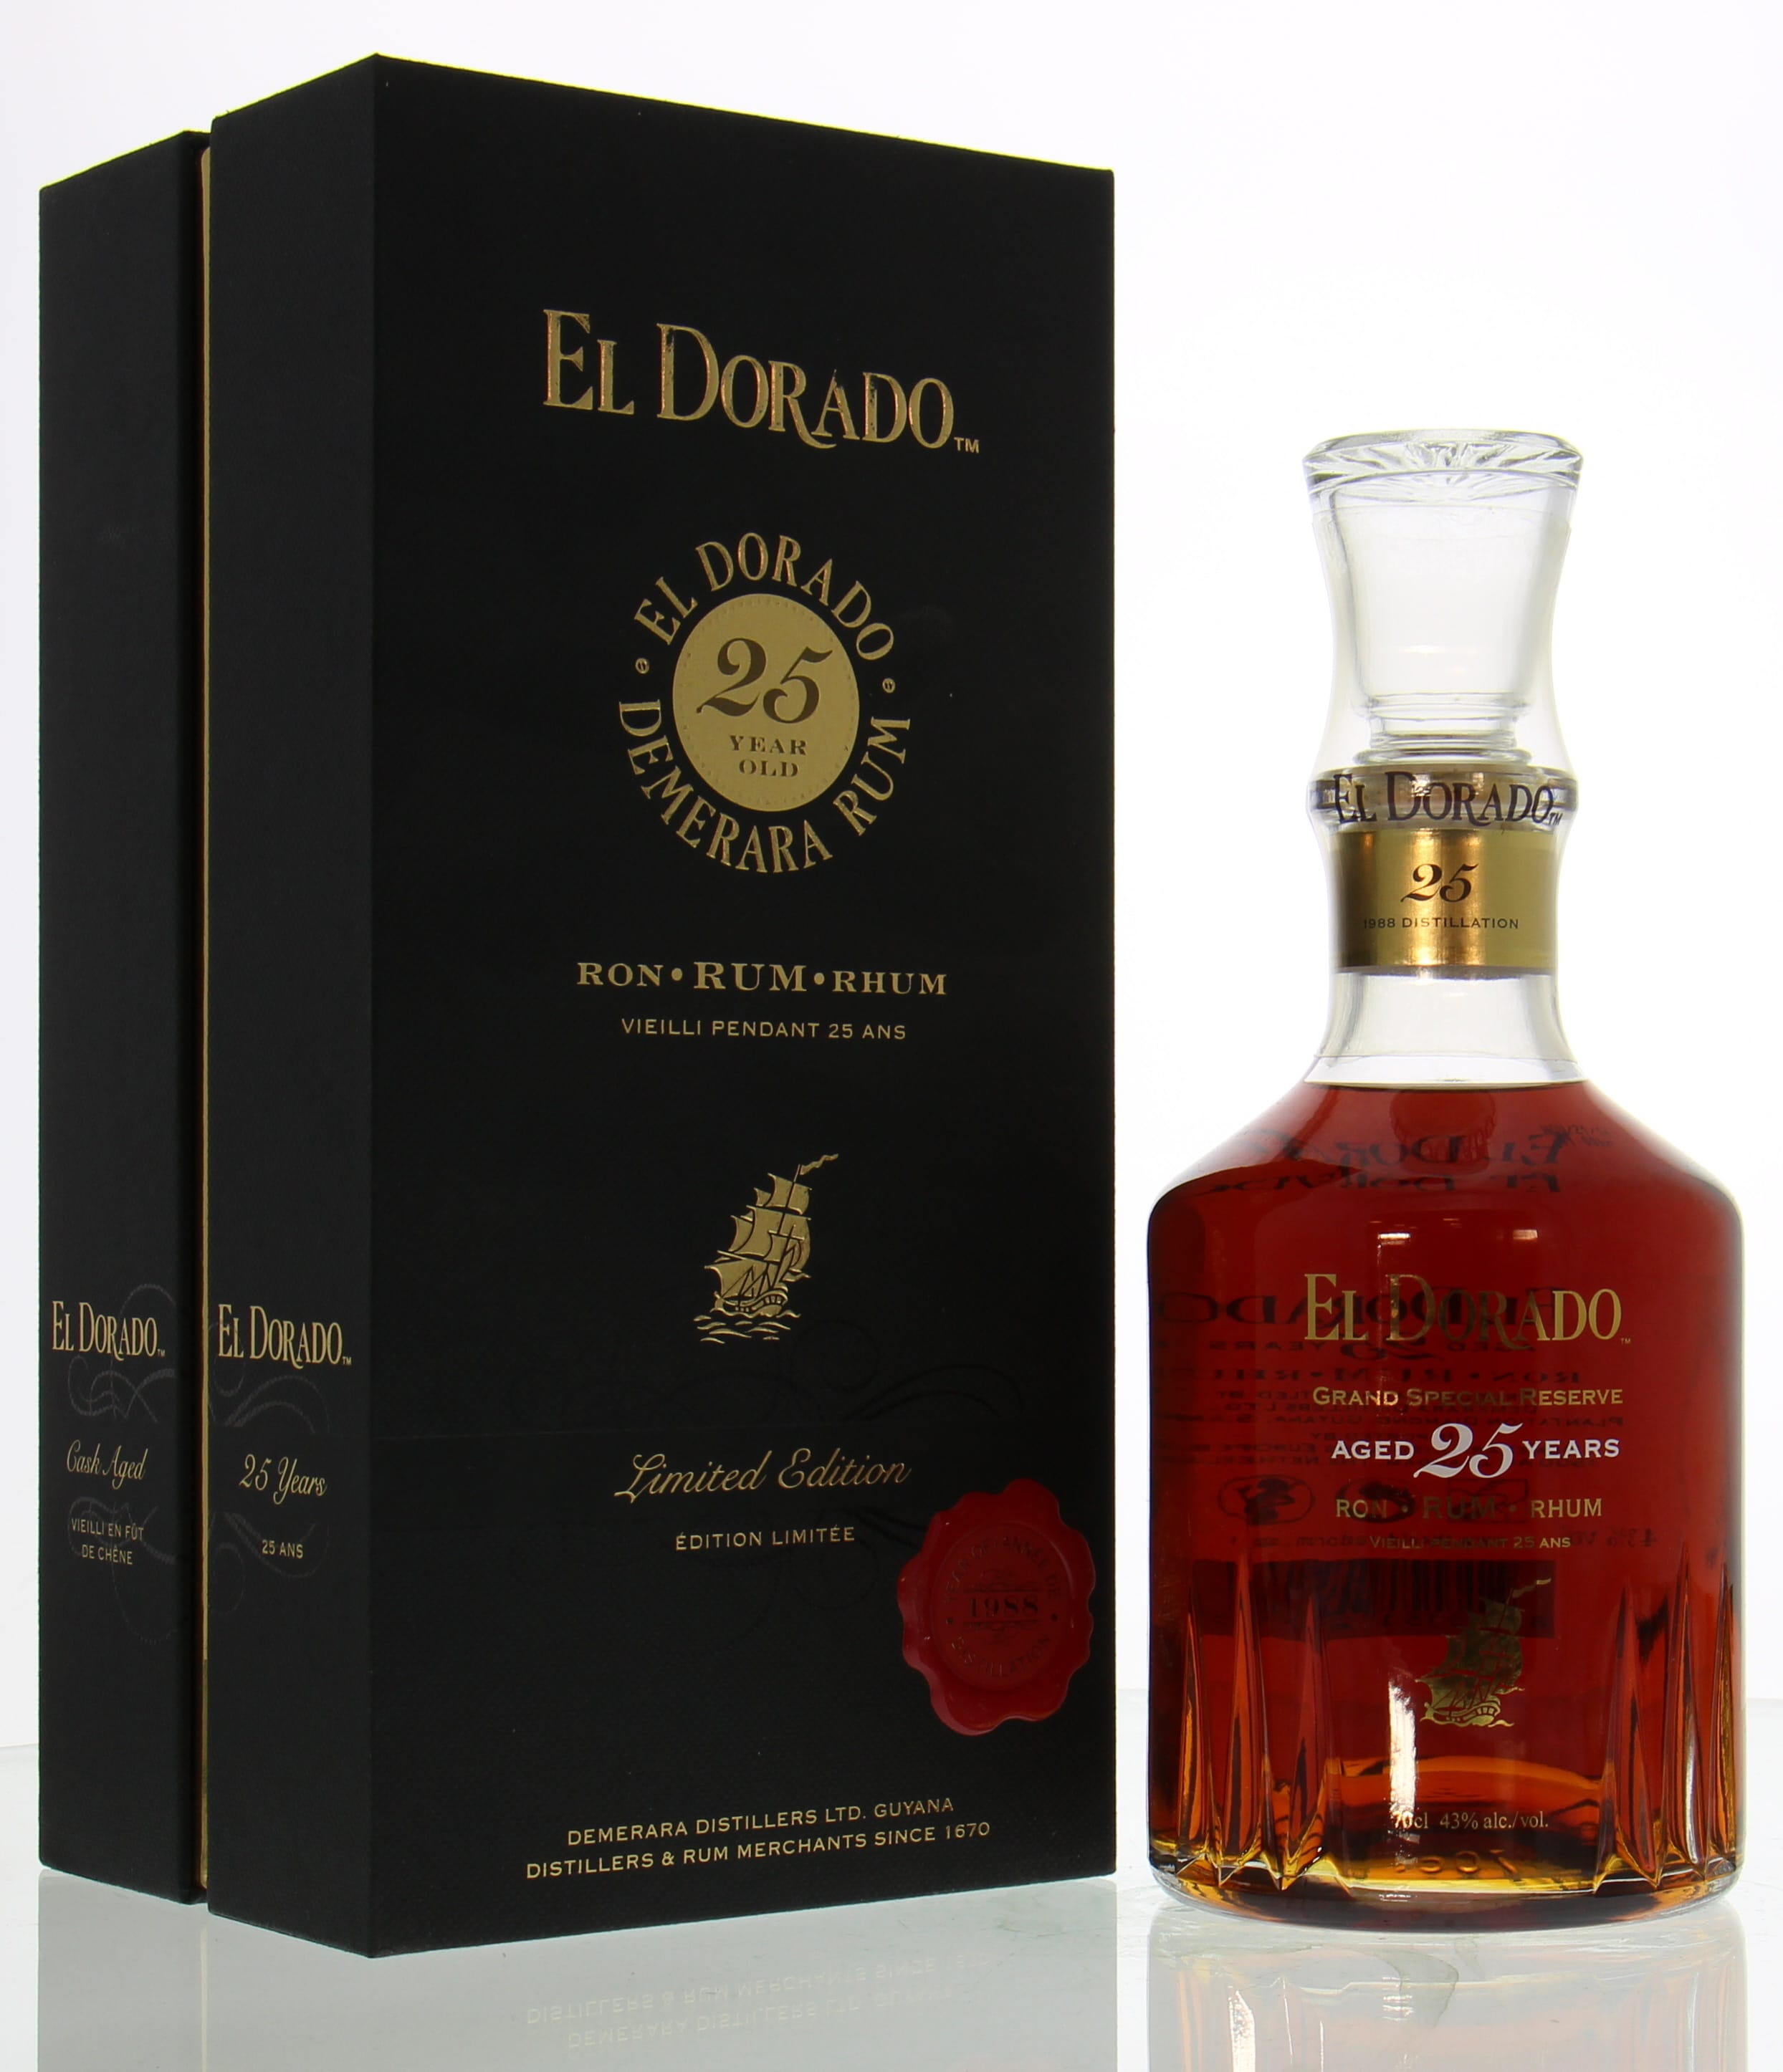 El Dorado - 25 years old grand special reserve rum 43 % 1988 Perfect